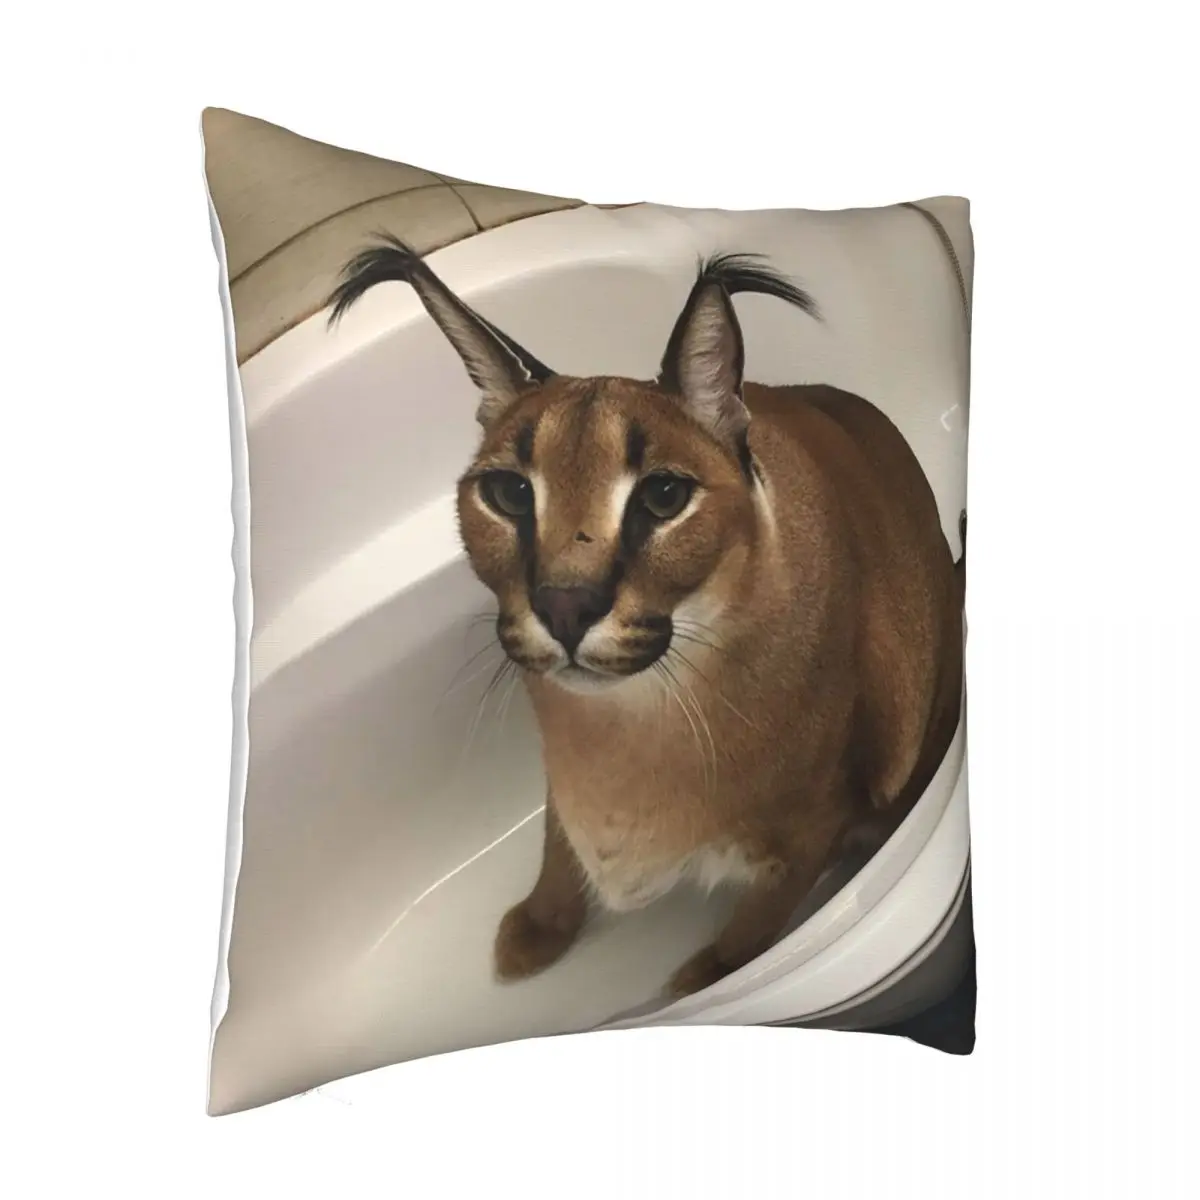 Floppa Cute Meme Cushion Cover 40x40 Home Decor Dakimakura Funny Caracal Cat Throw Pillow Case for Living Room Housse De Coussin images - 6